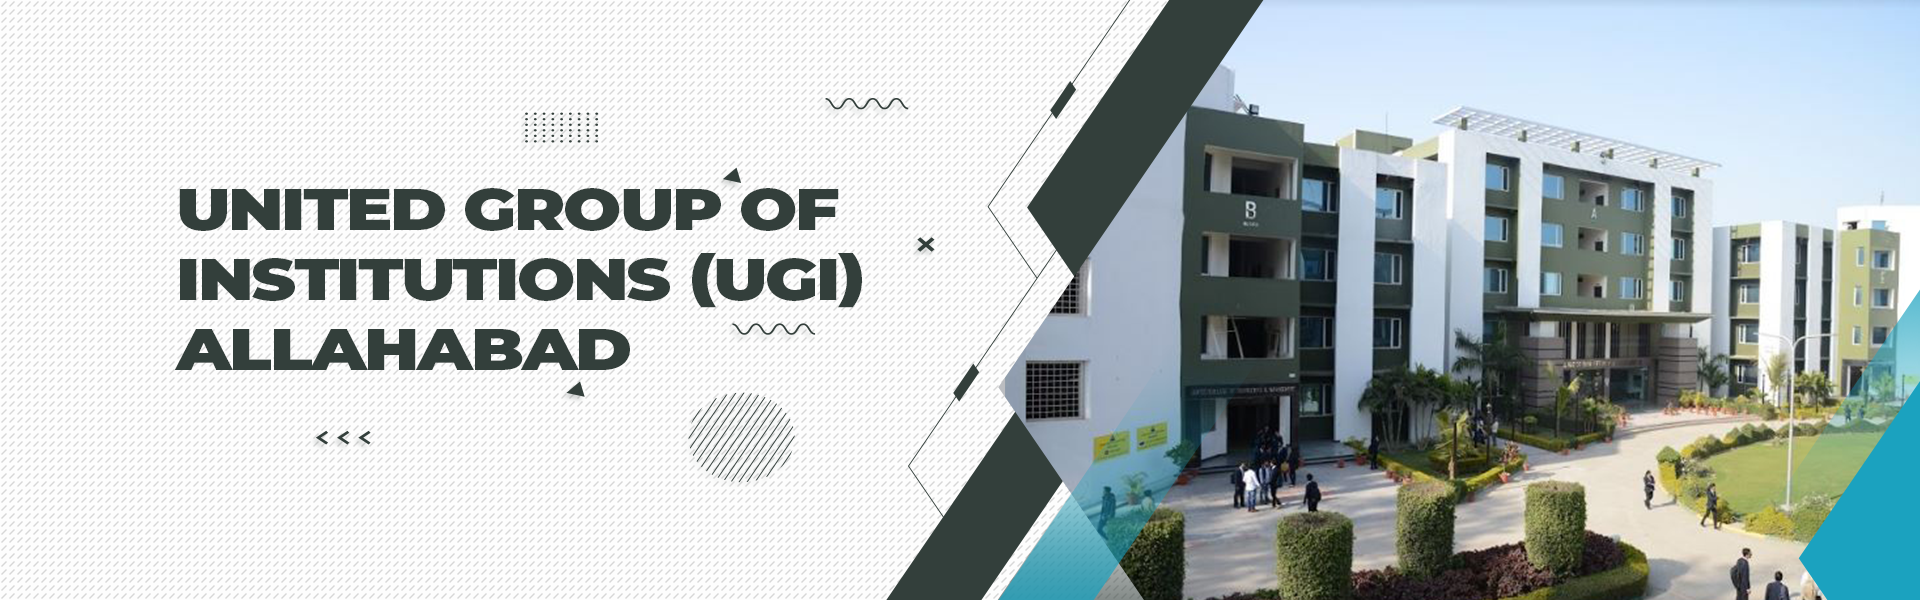 United Group of Institutions (UGI)